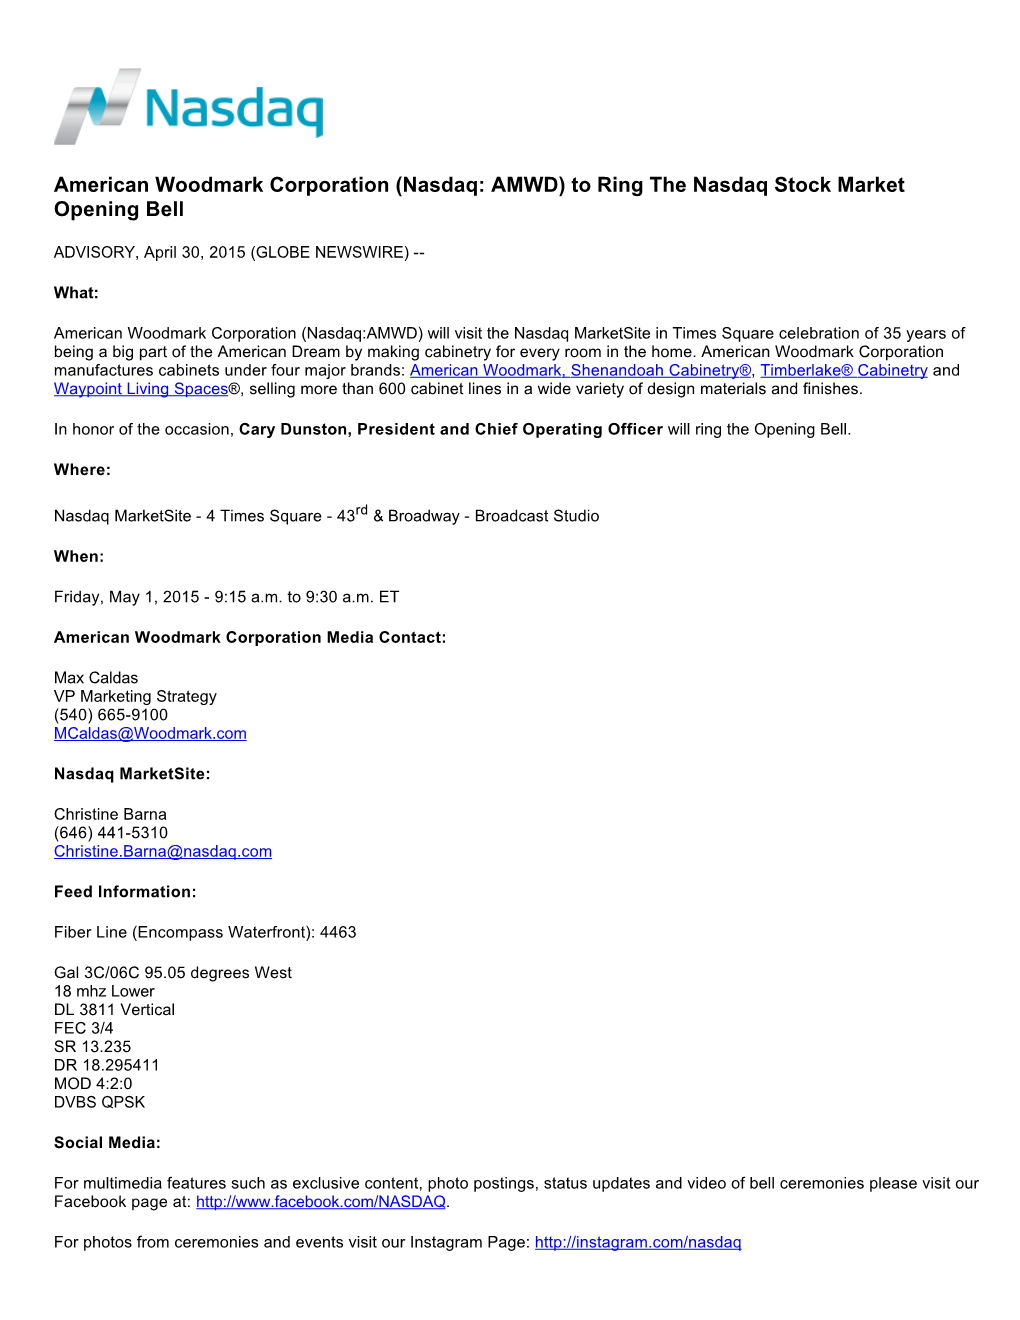 American Woodmark Corporation (Nasdaq: AMWD) to Ring the Nasdaq Stock Market Opening Bell